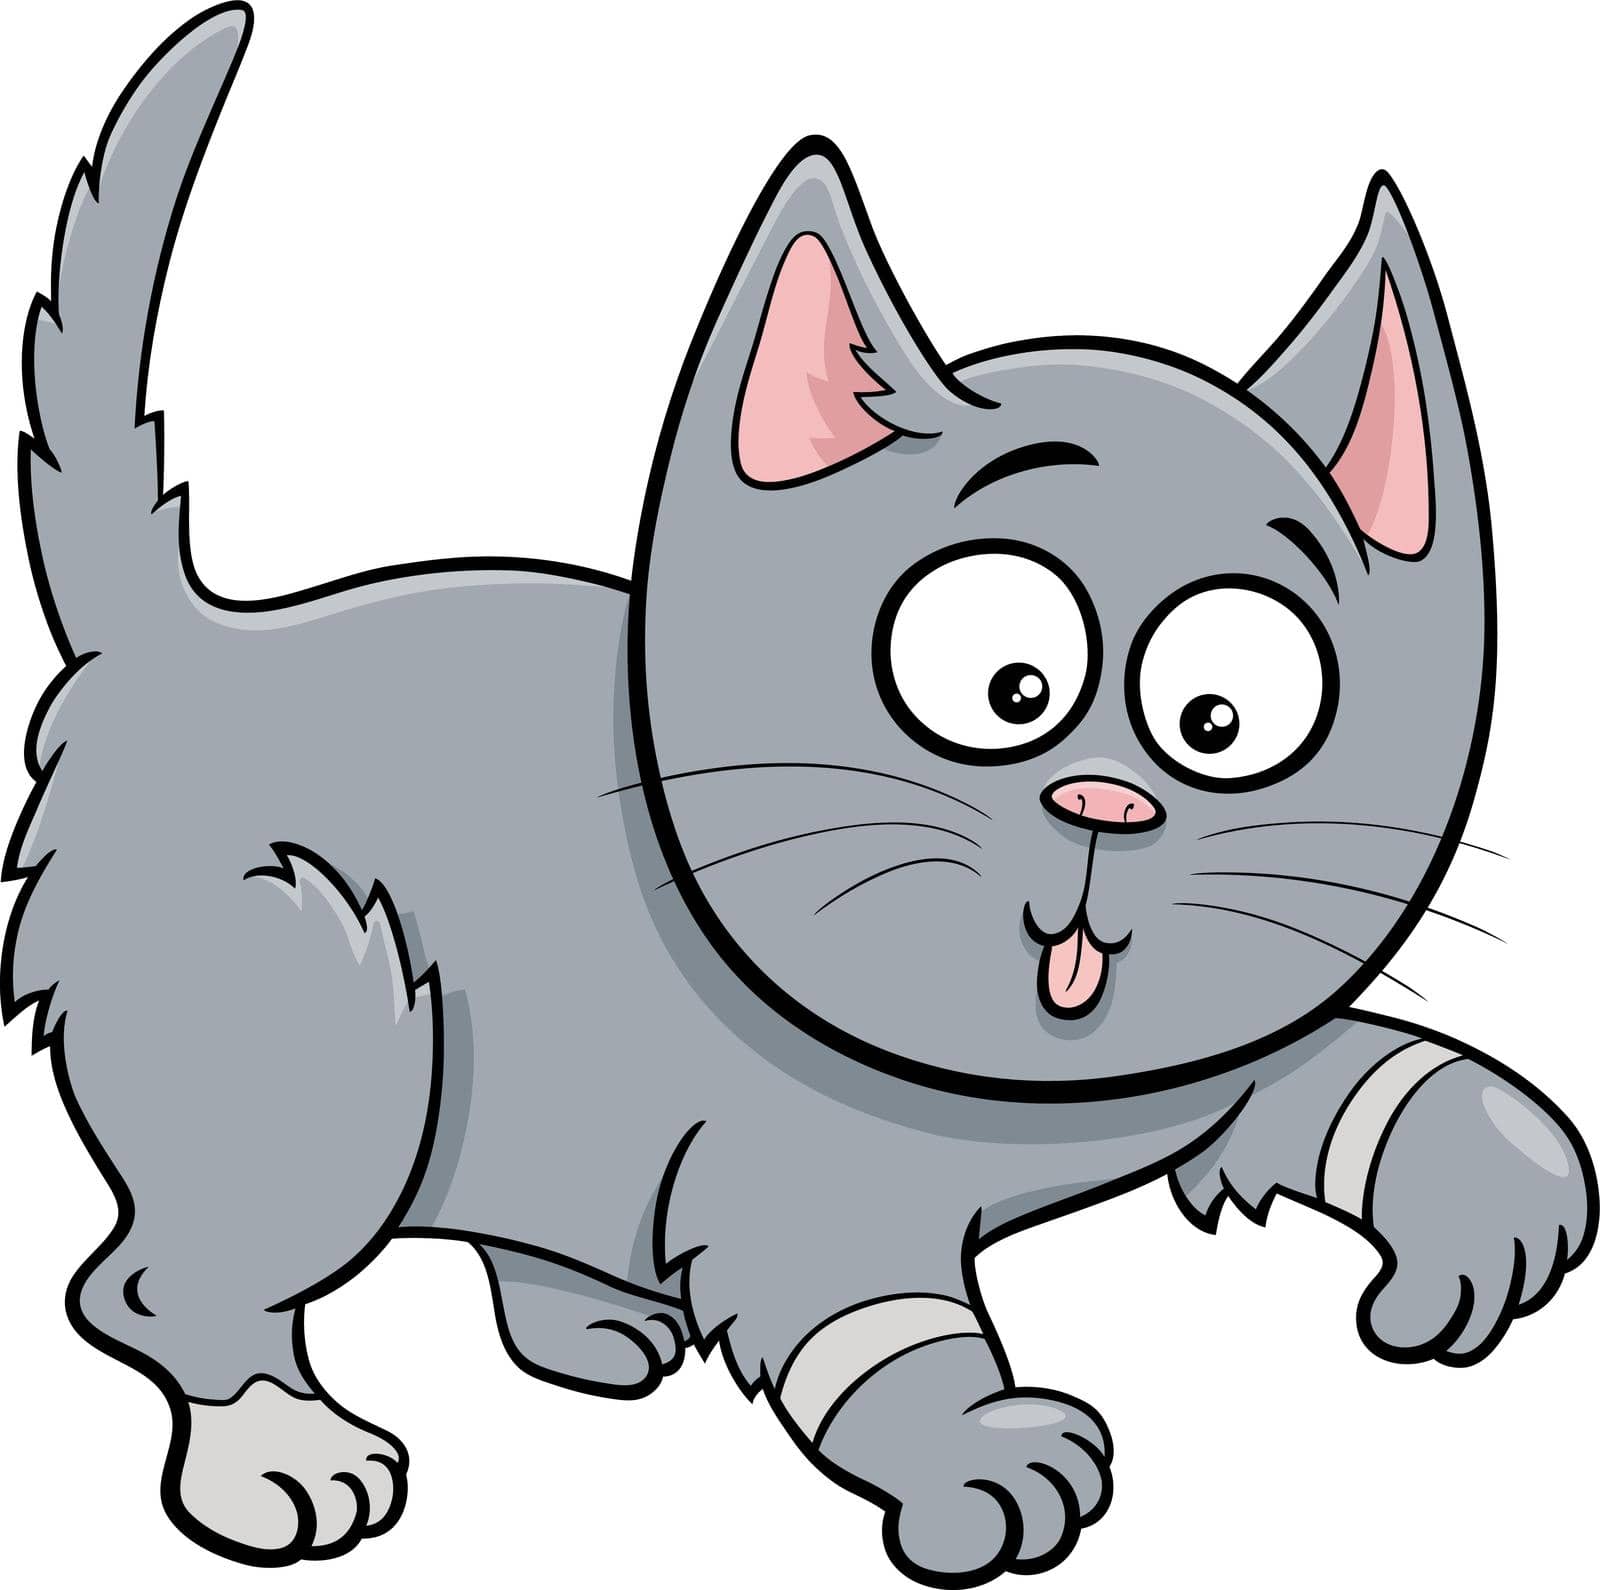 Cartoon illustration of playful cat or kitten comic animal character